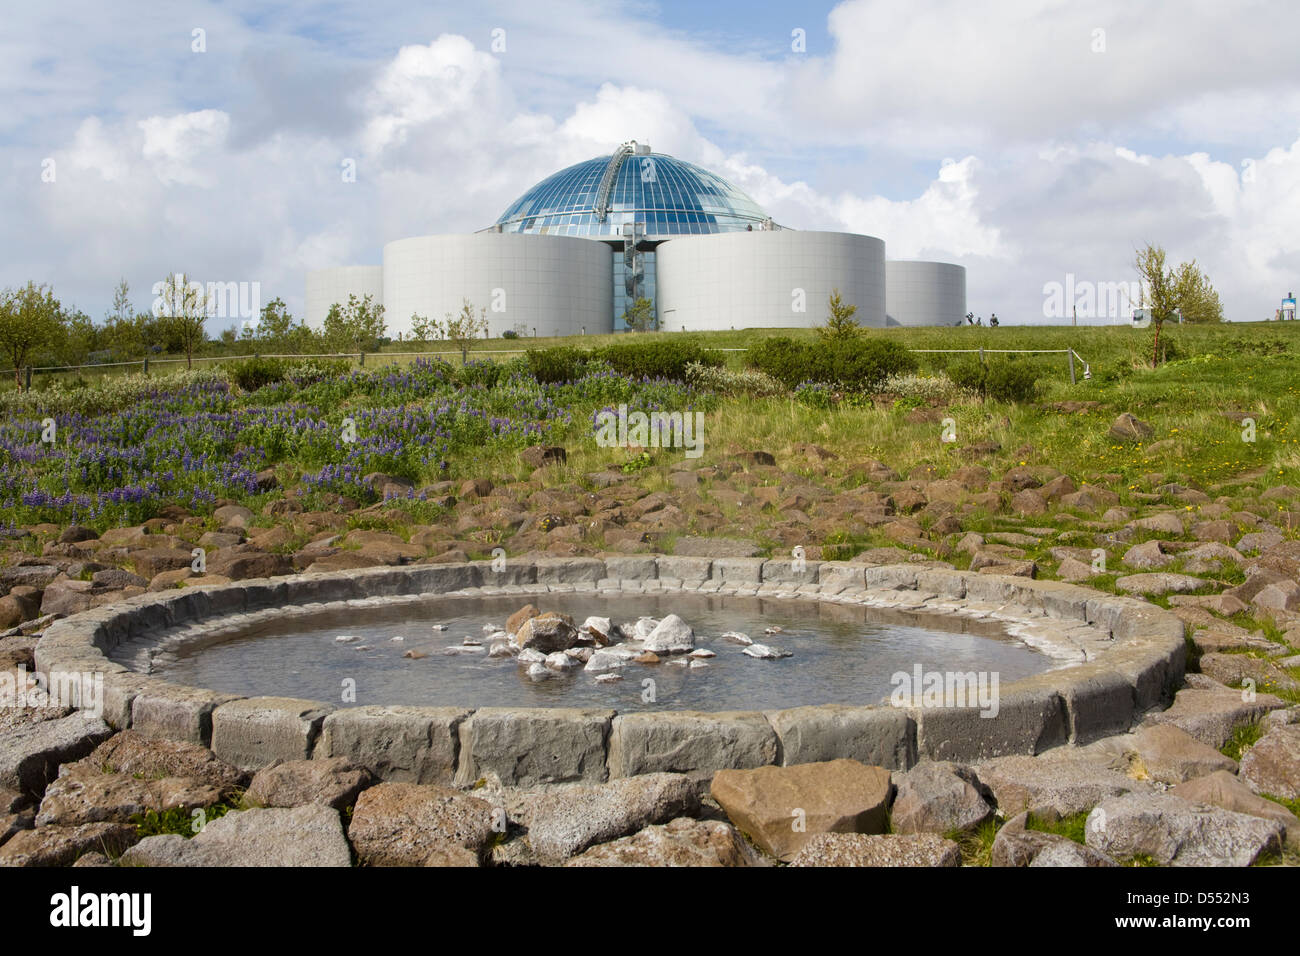 Iceland Reykjavik Hot Water Storage Tank Landmark The Pearl Stock Photo